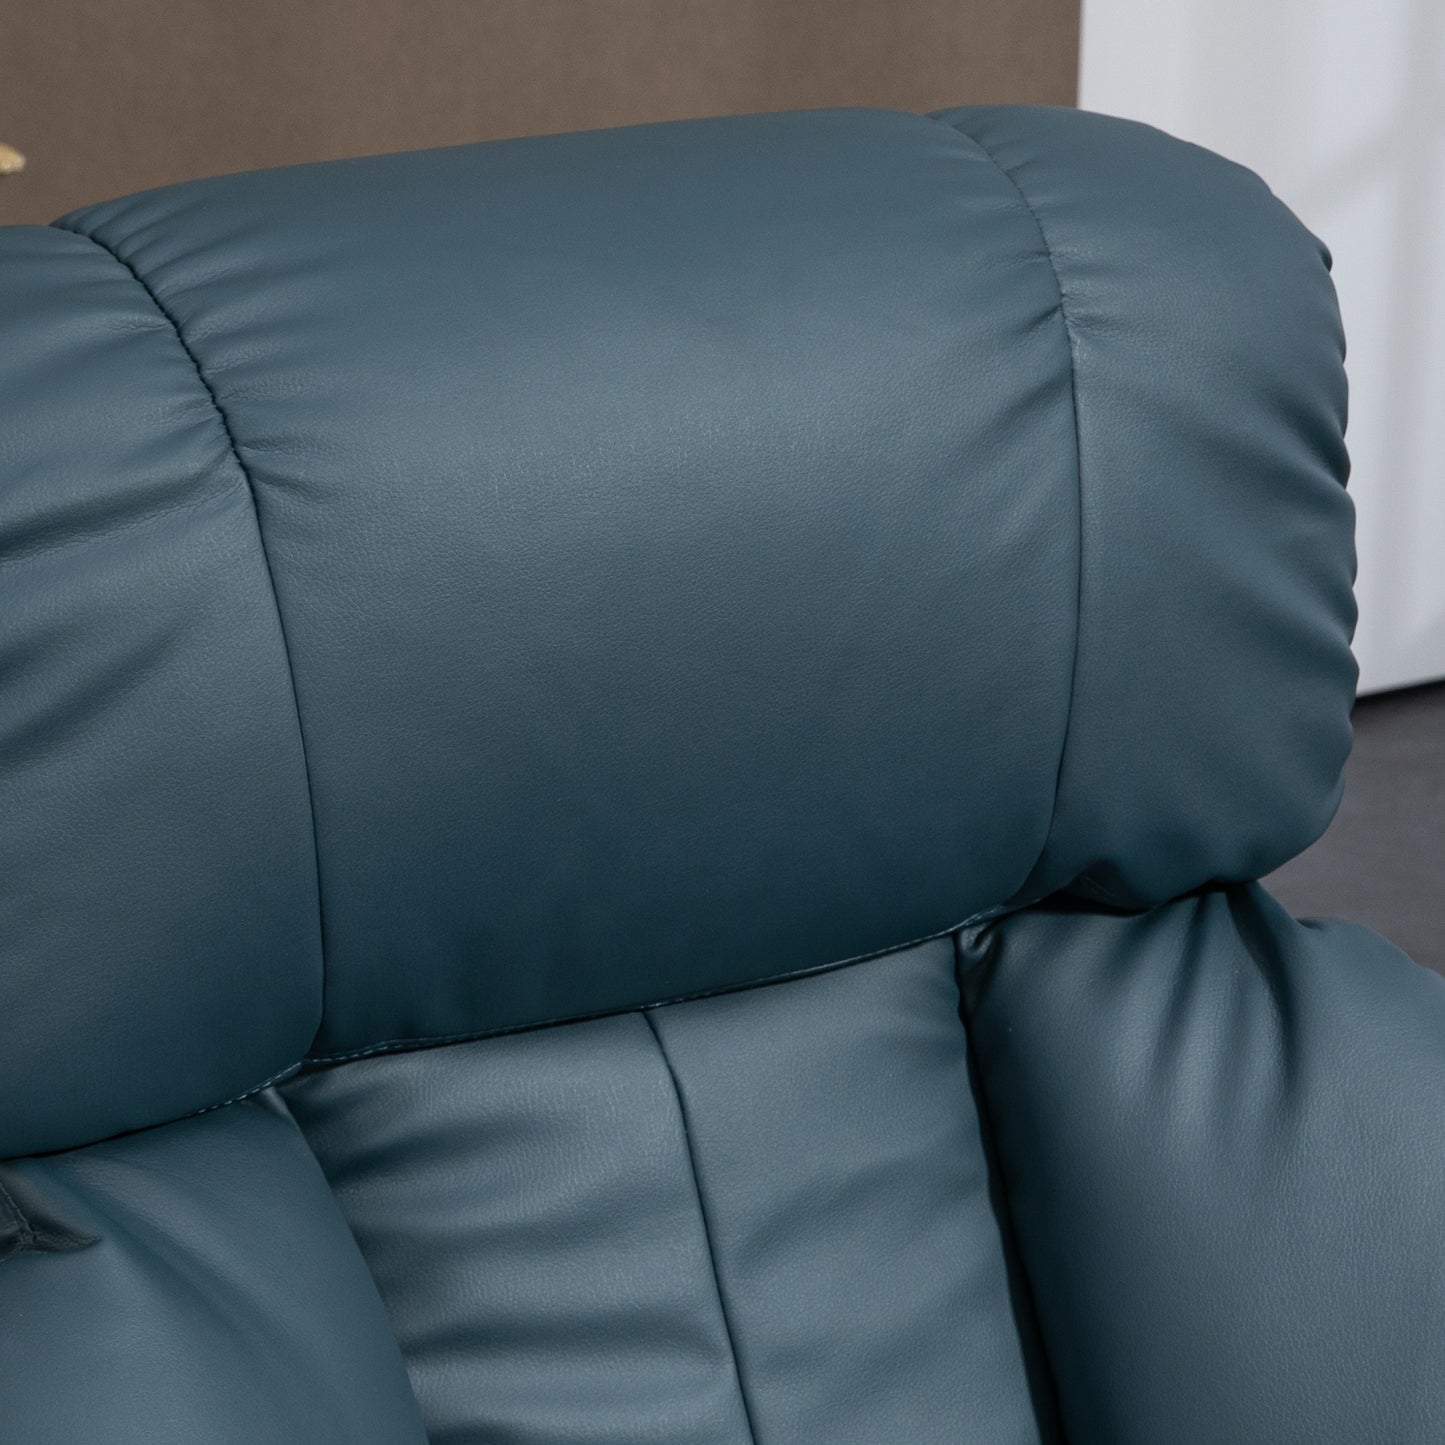 Harvey 360° Swivel Massage Recliner Chair with Ottoman - Blue